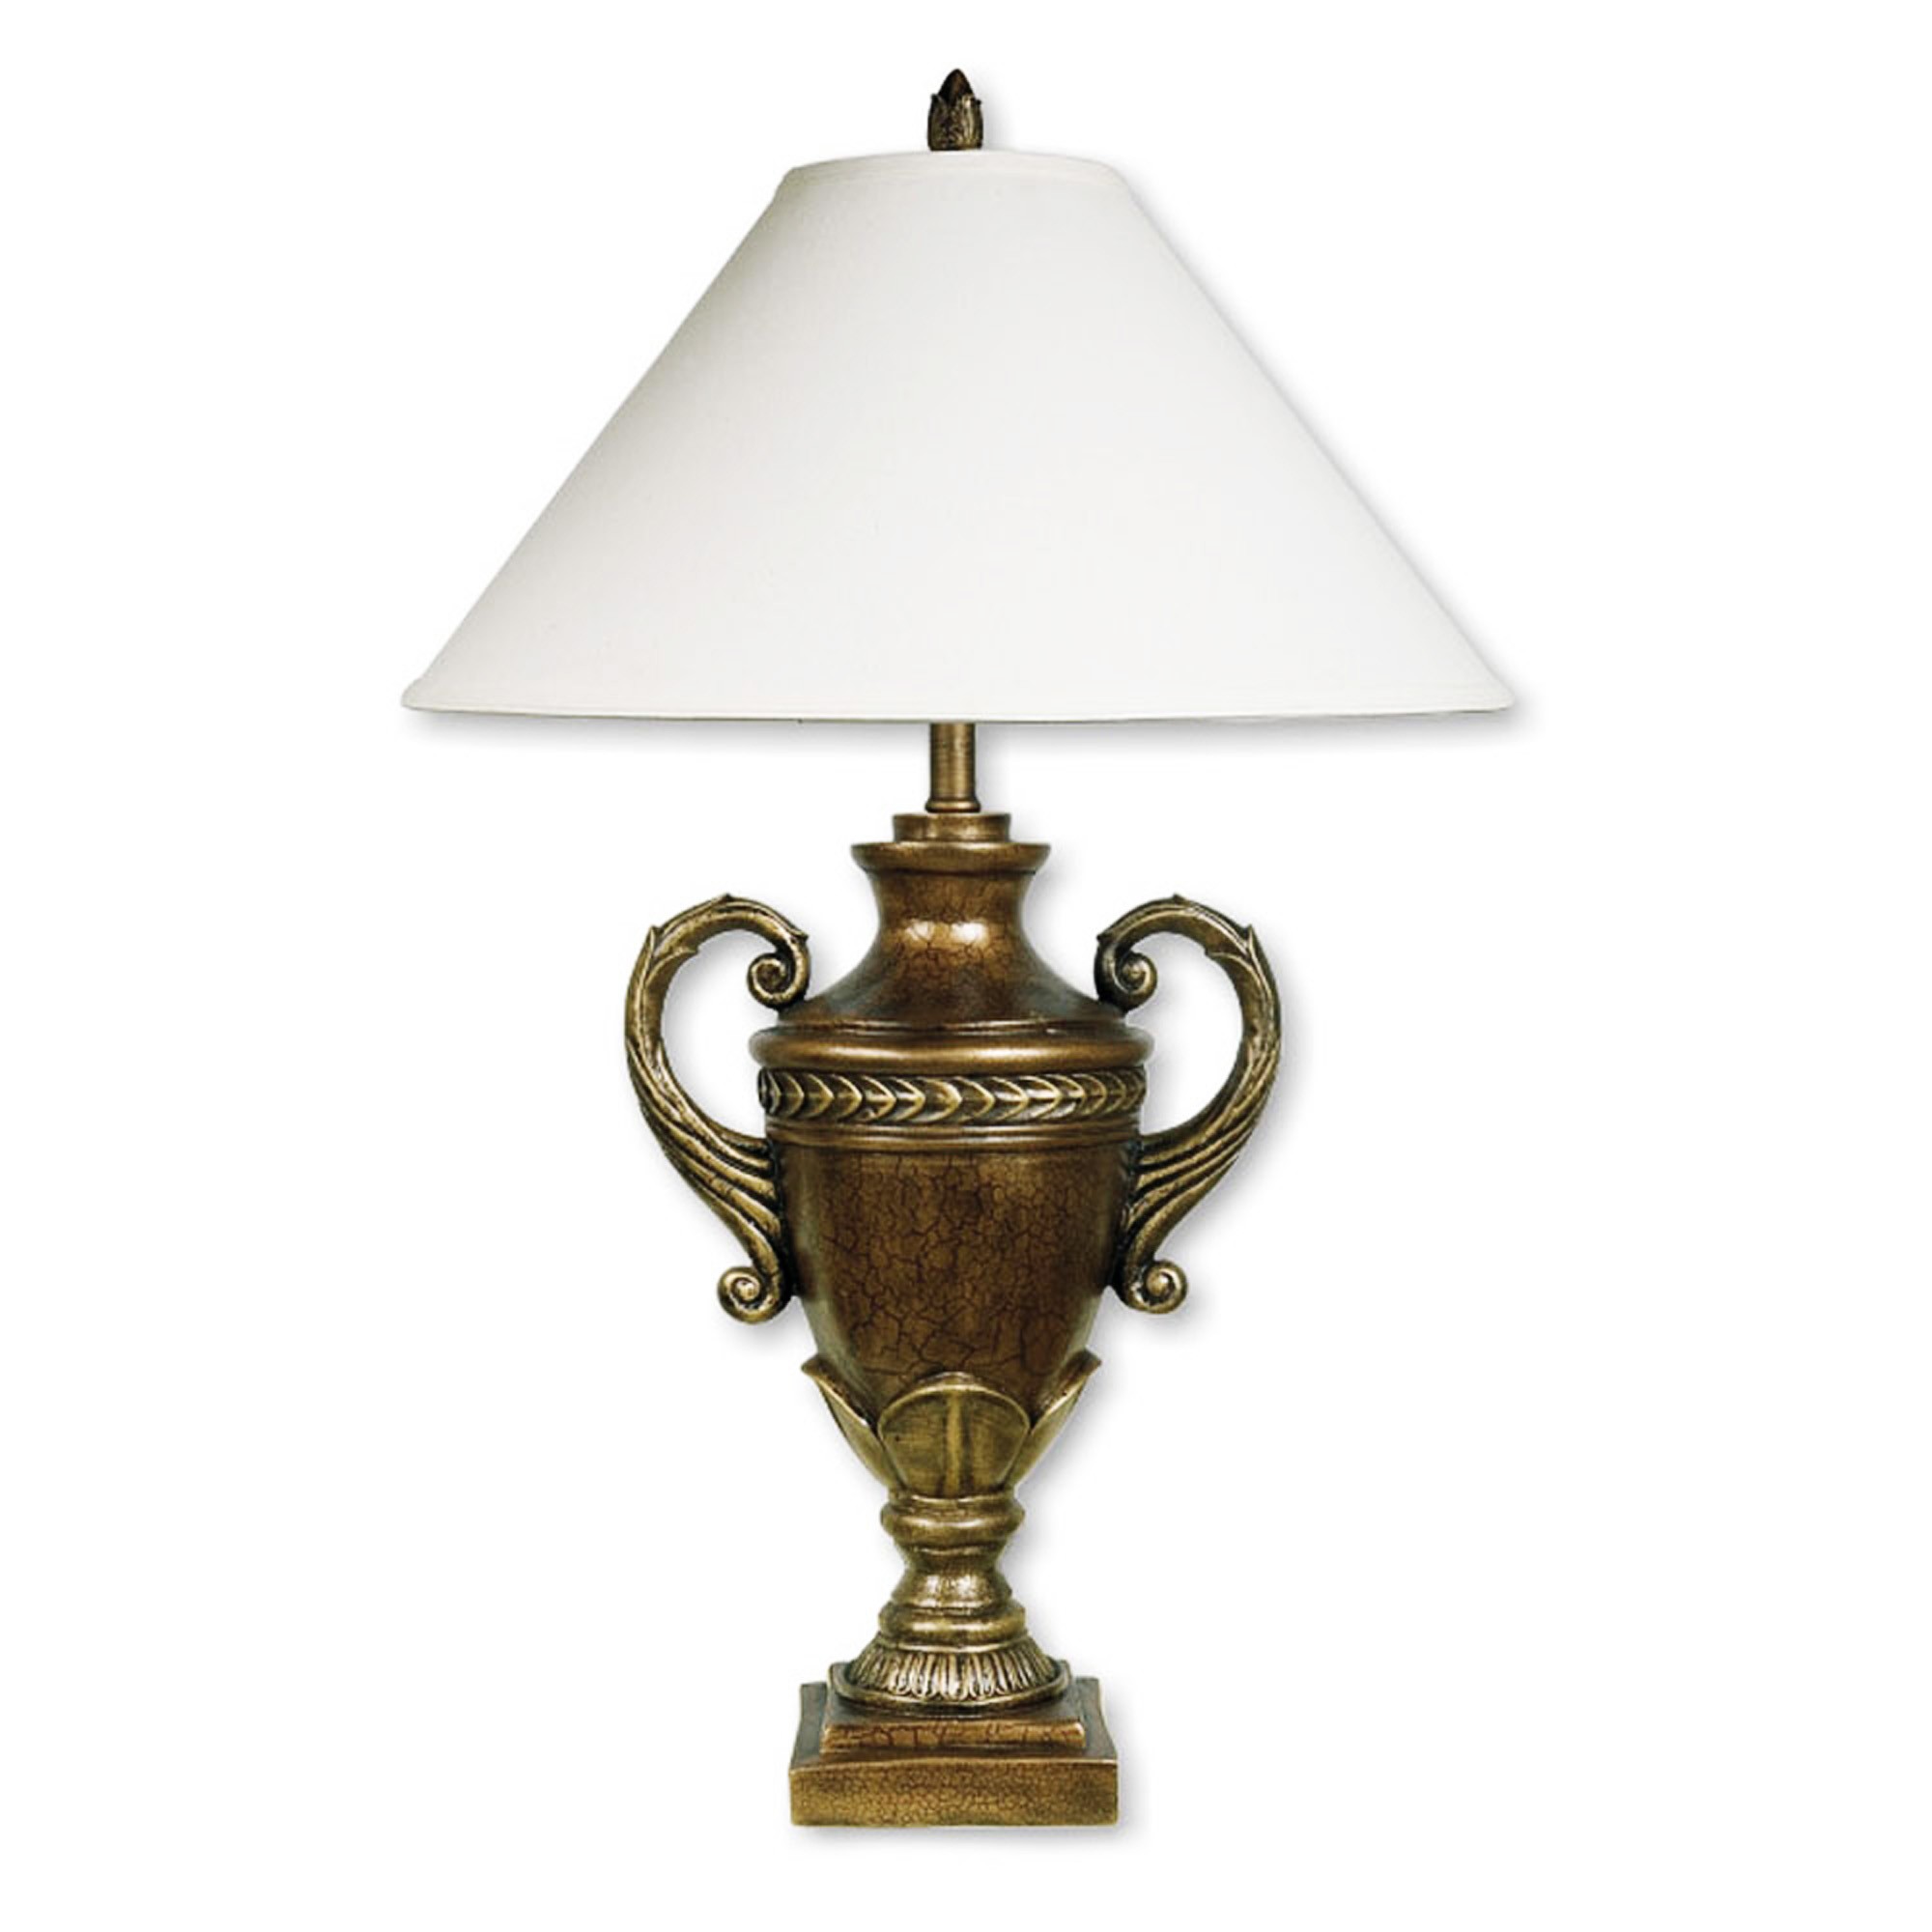 Antique Gold Trophy Table Lamp